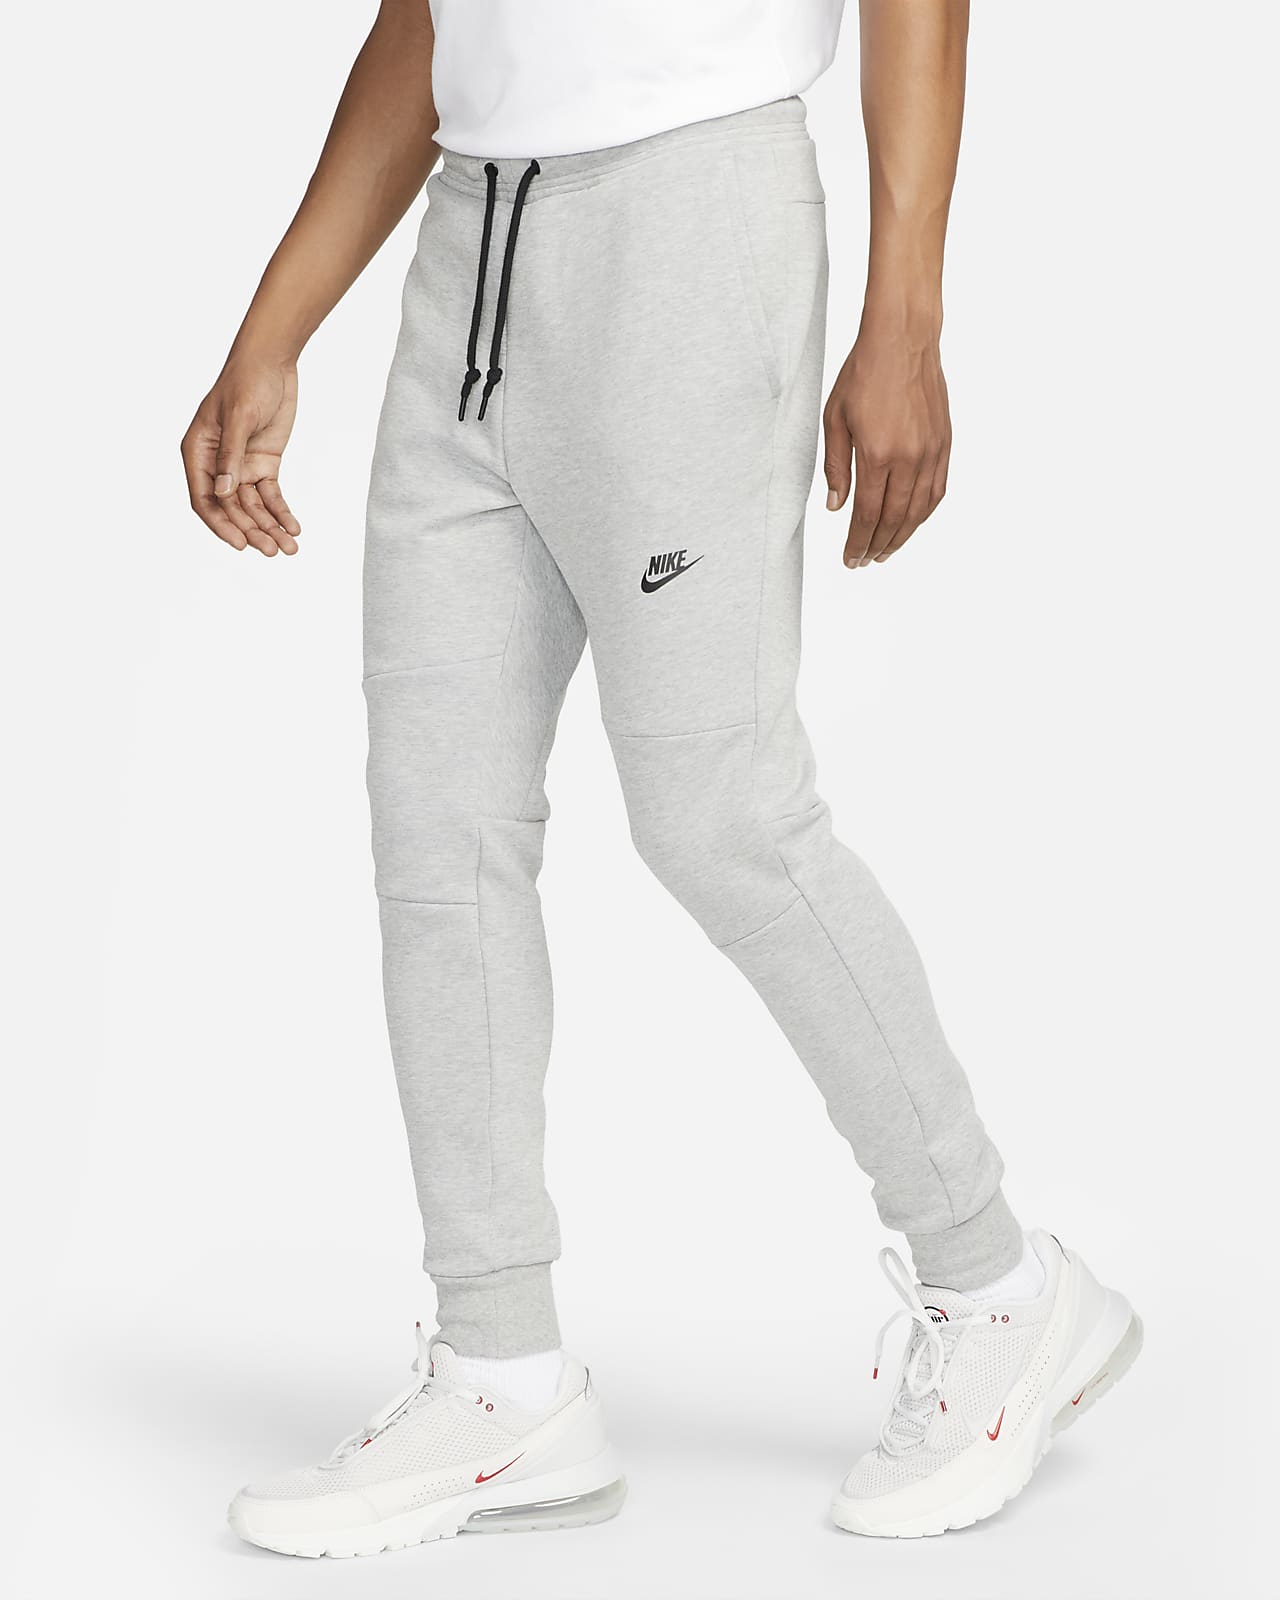 Nike Sportswear Tech Fleece OG Herren-Jogger in schmaler Passform